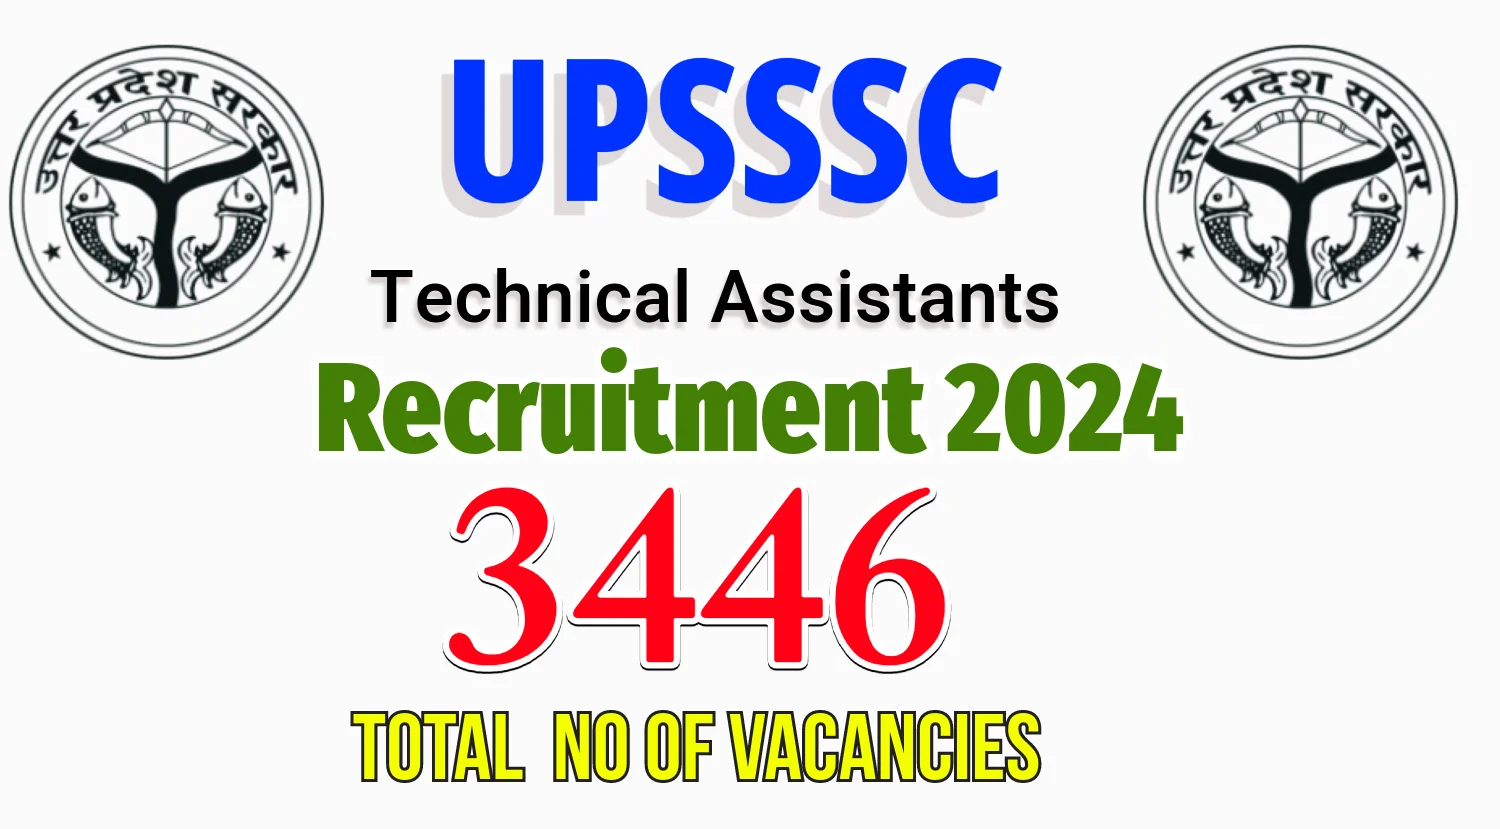 UPSSSC Recruitment